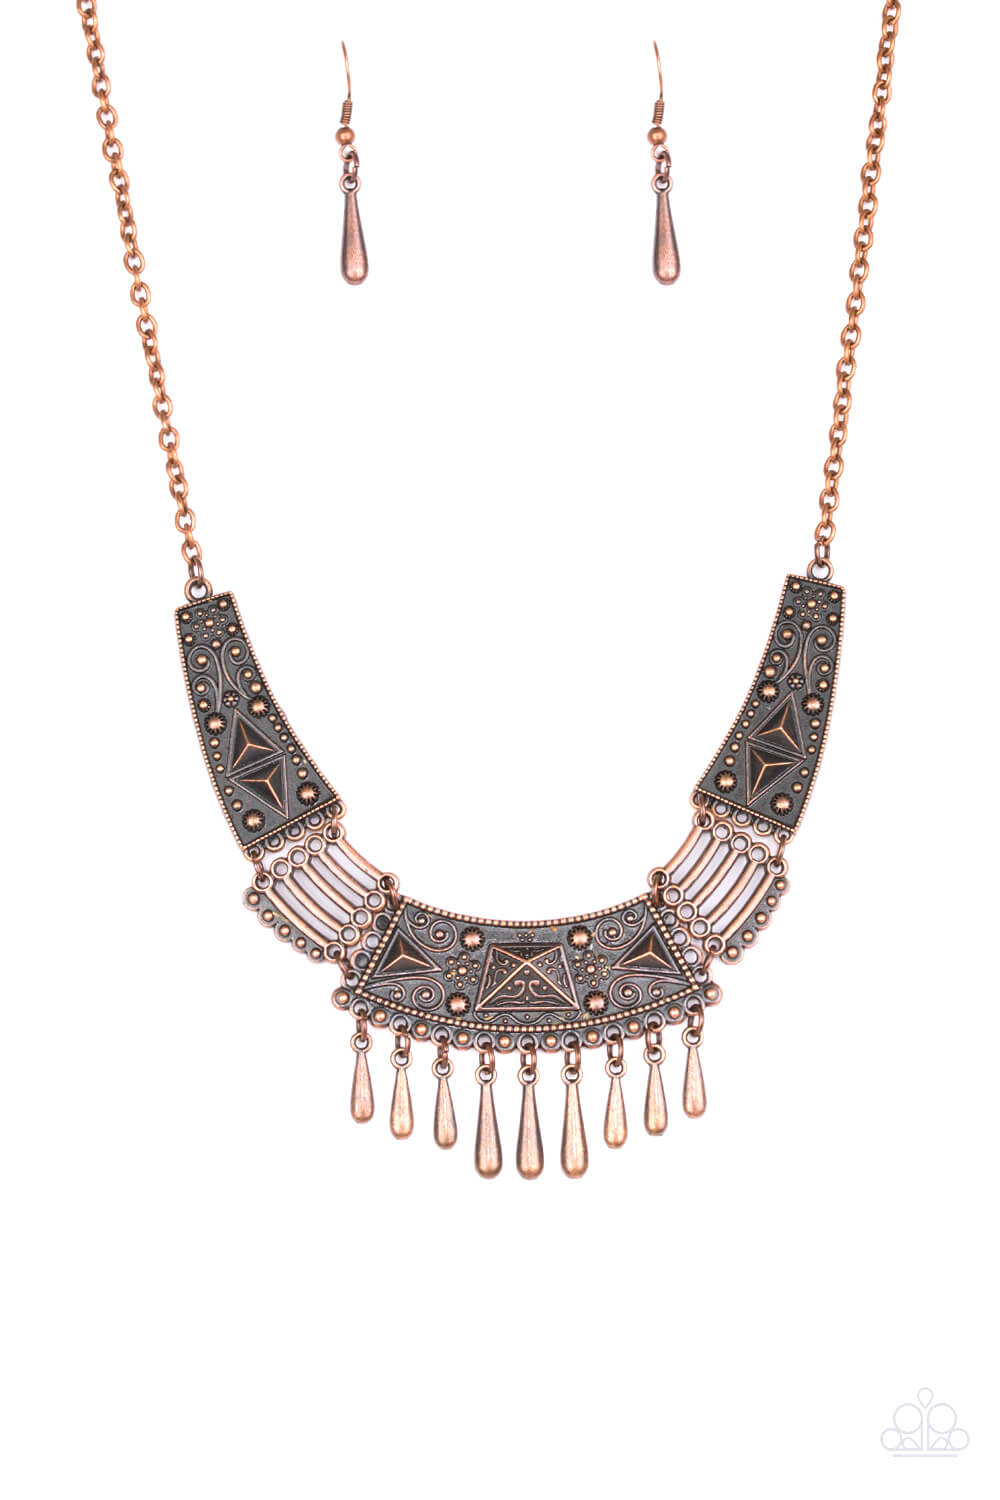 STEER It Up - Copper Tribal Necklace Set - Princess Glam Shop